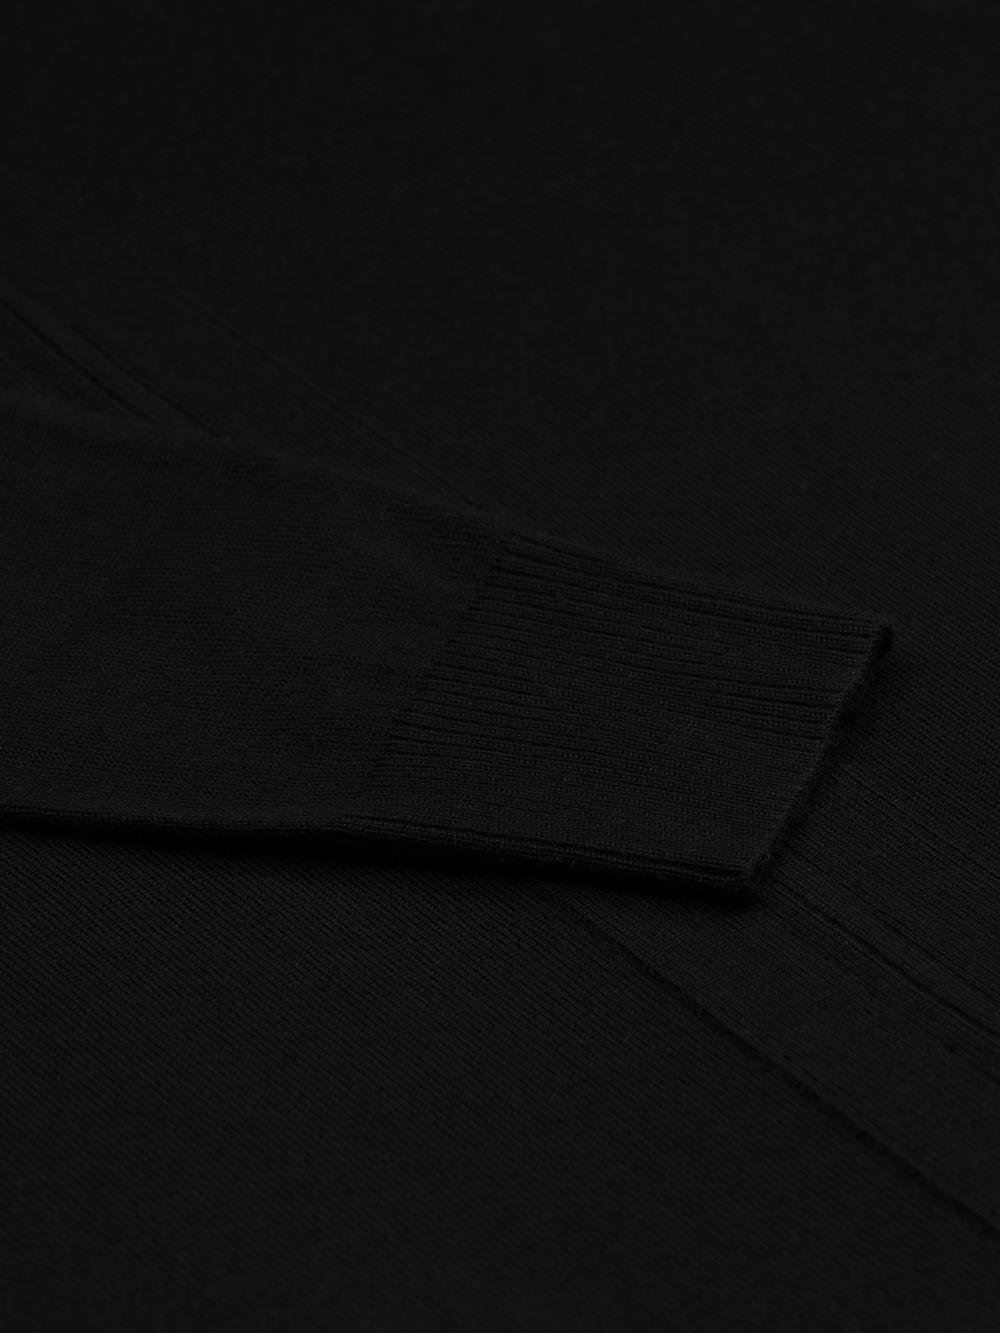 Bady zip-up cardigan in black merino